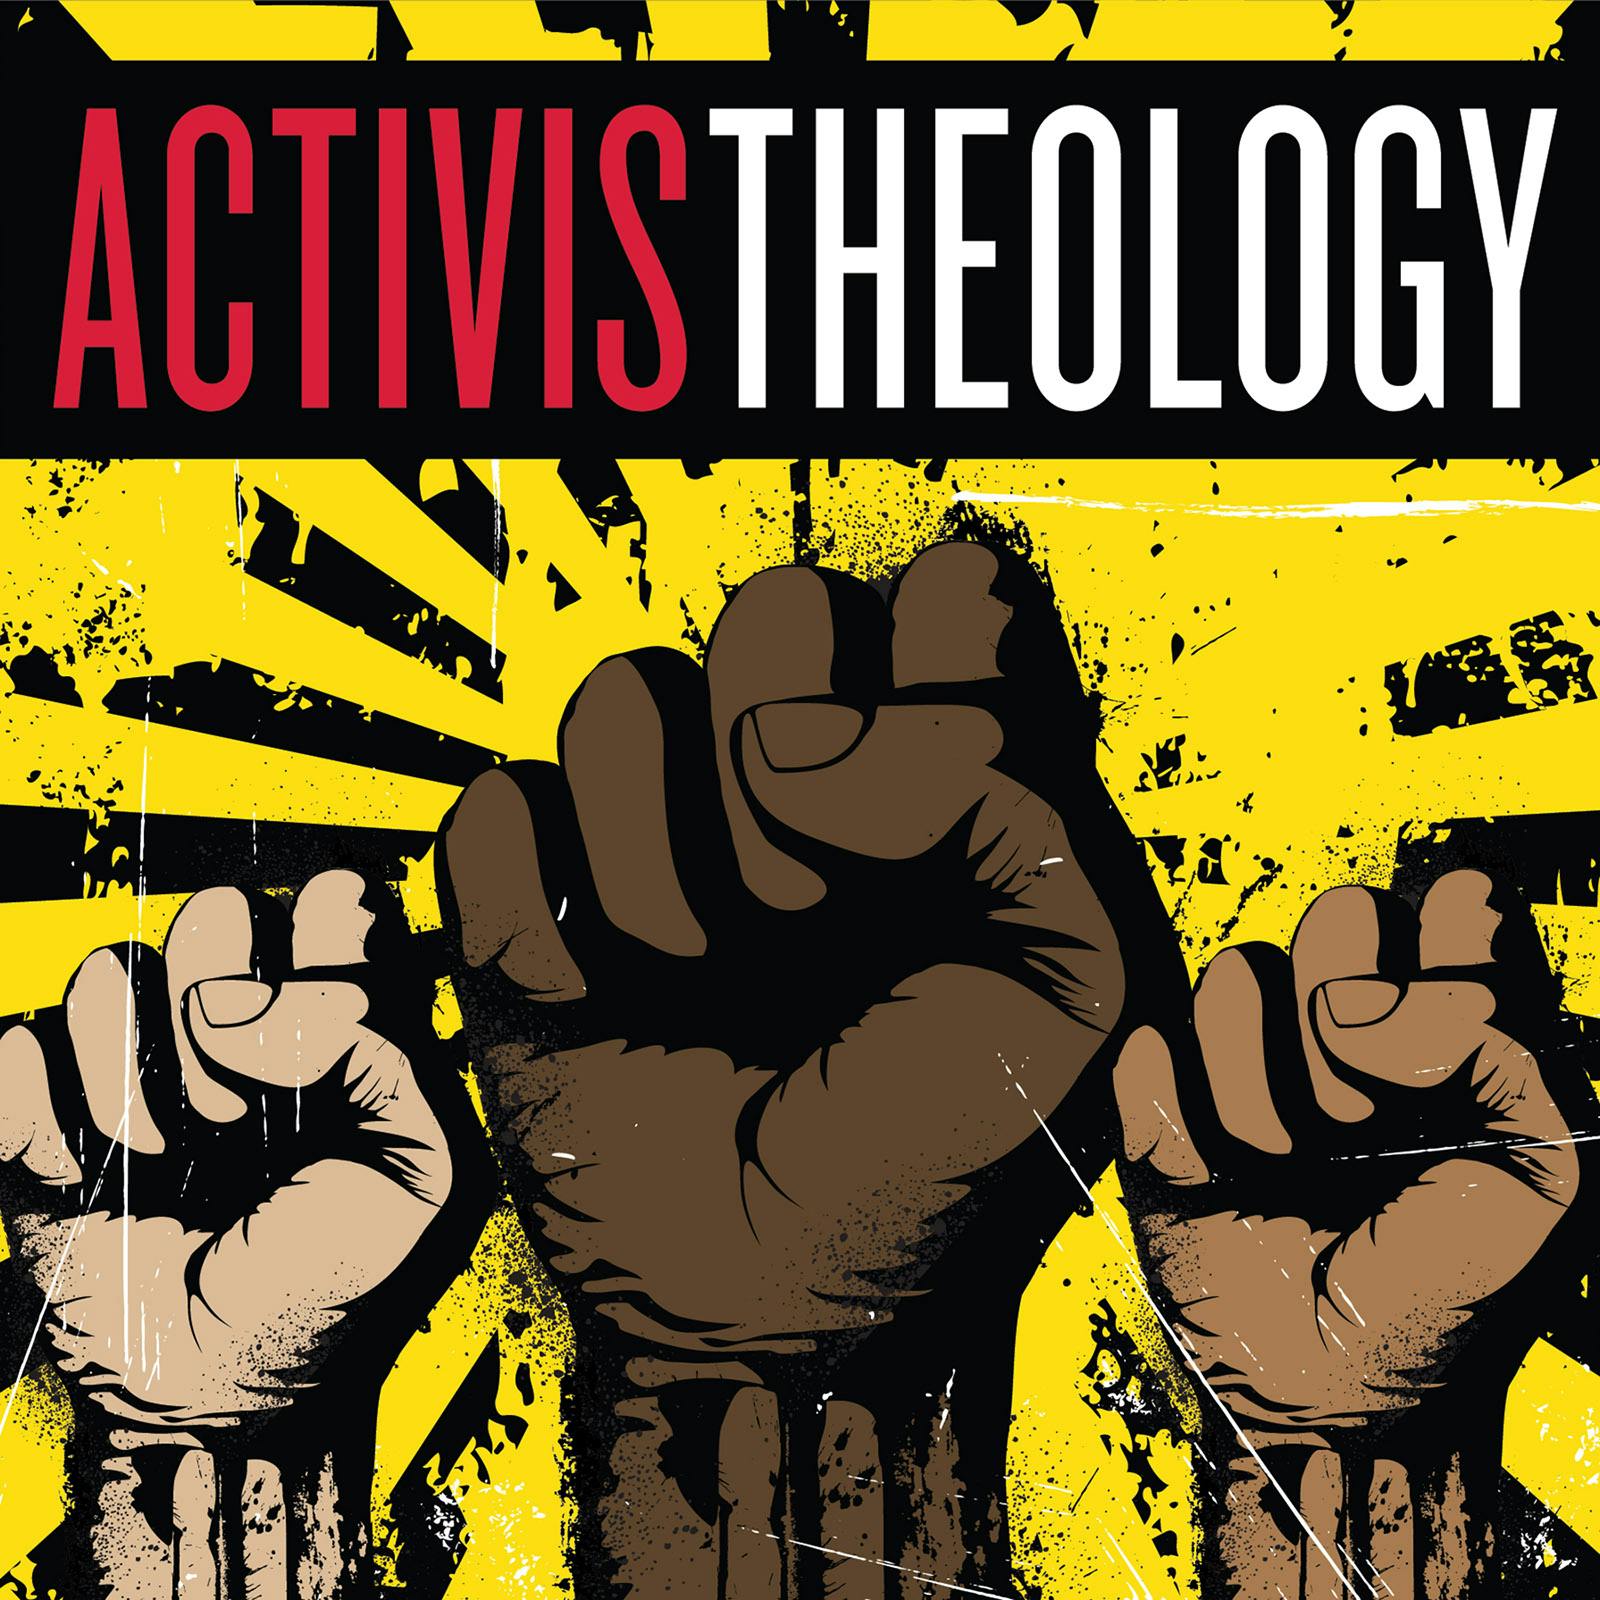 Activist Theology Podcast Album Art